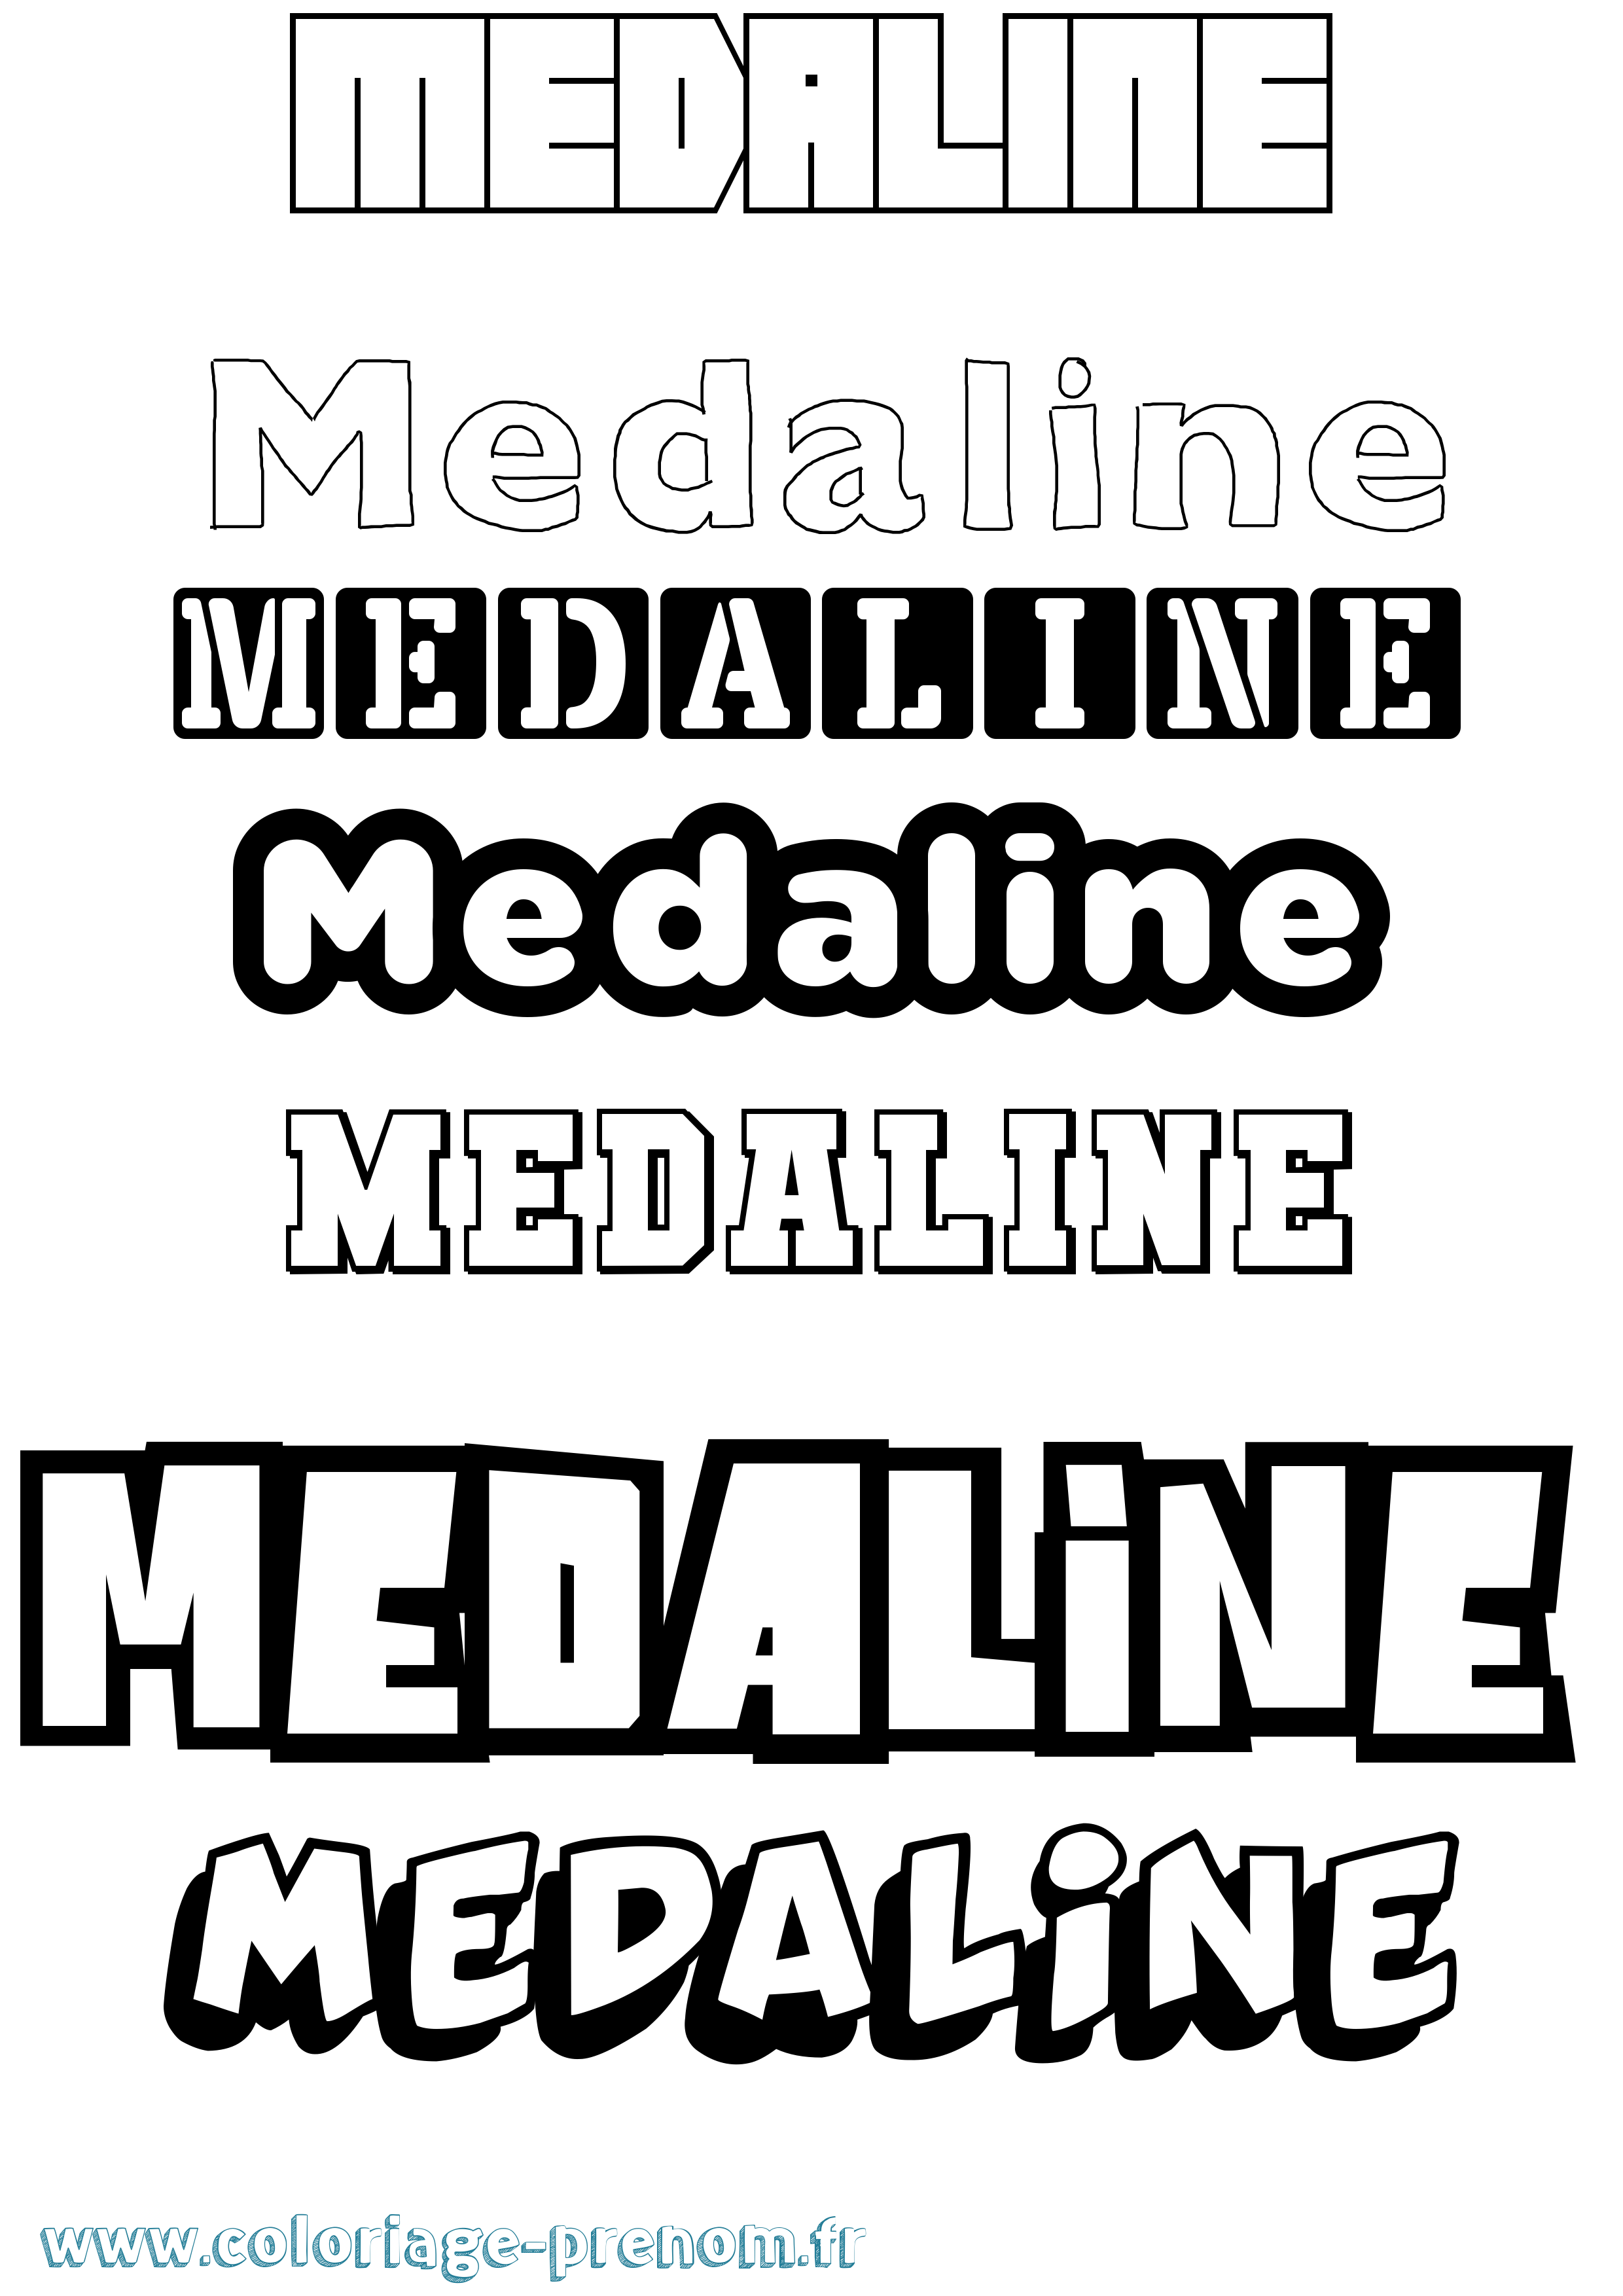 Coloriage prénom Medaline Simple